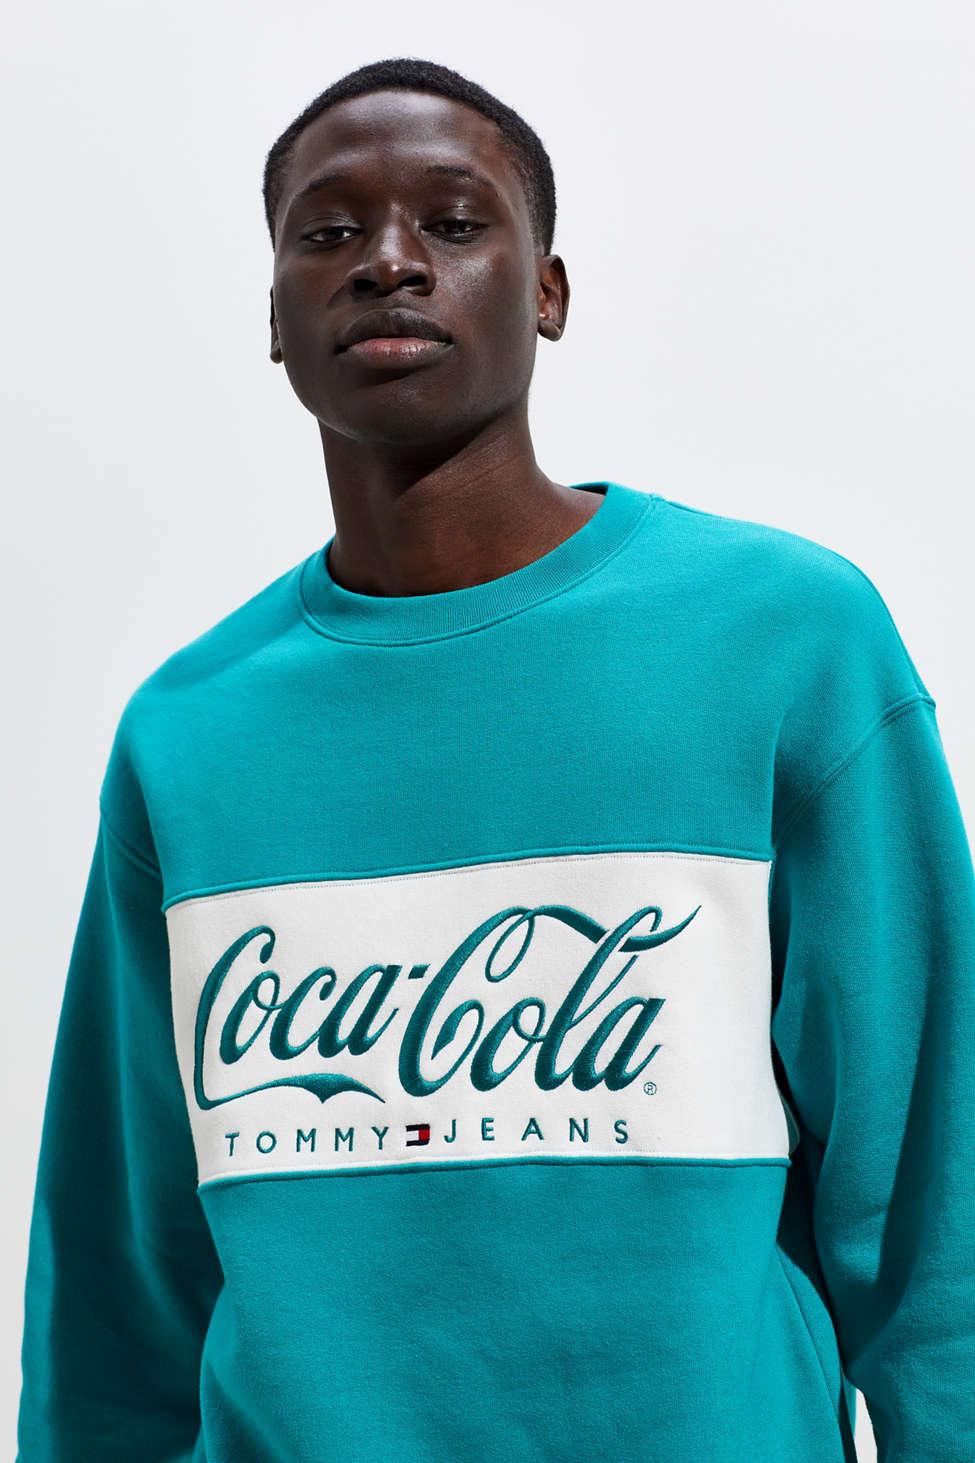 Tommy Hilfiger Coca Cola Sweatshirt Hot Sale, SAVE 40% -  raptorunderlayment.com